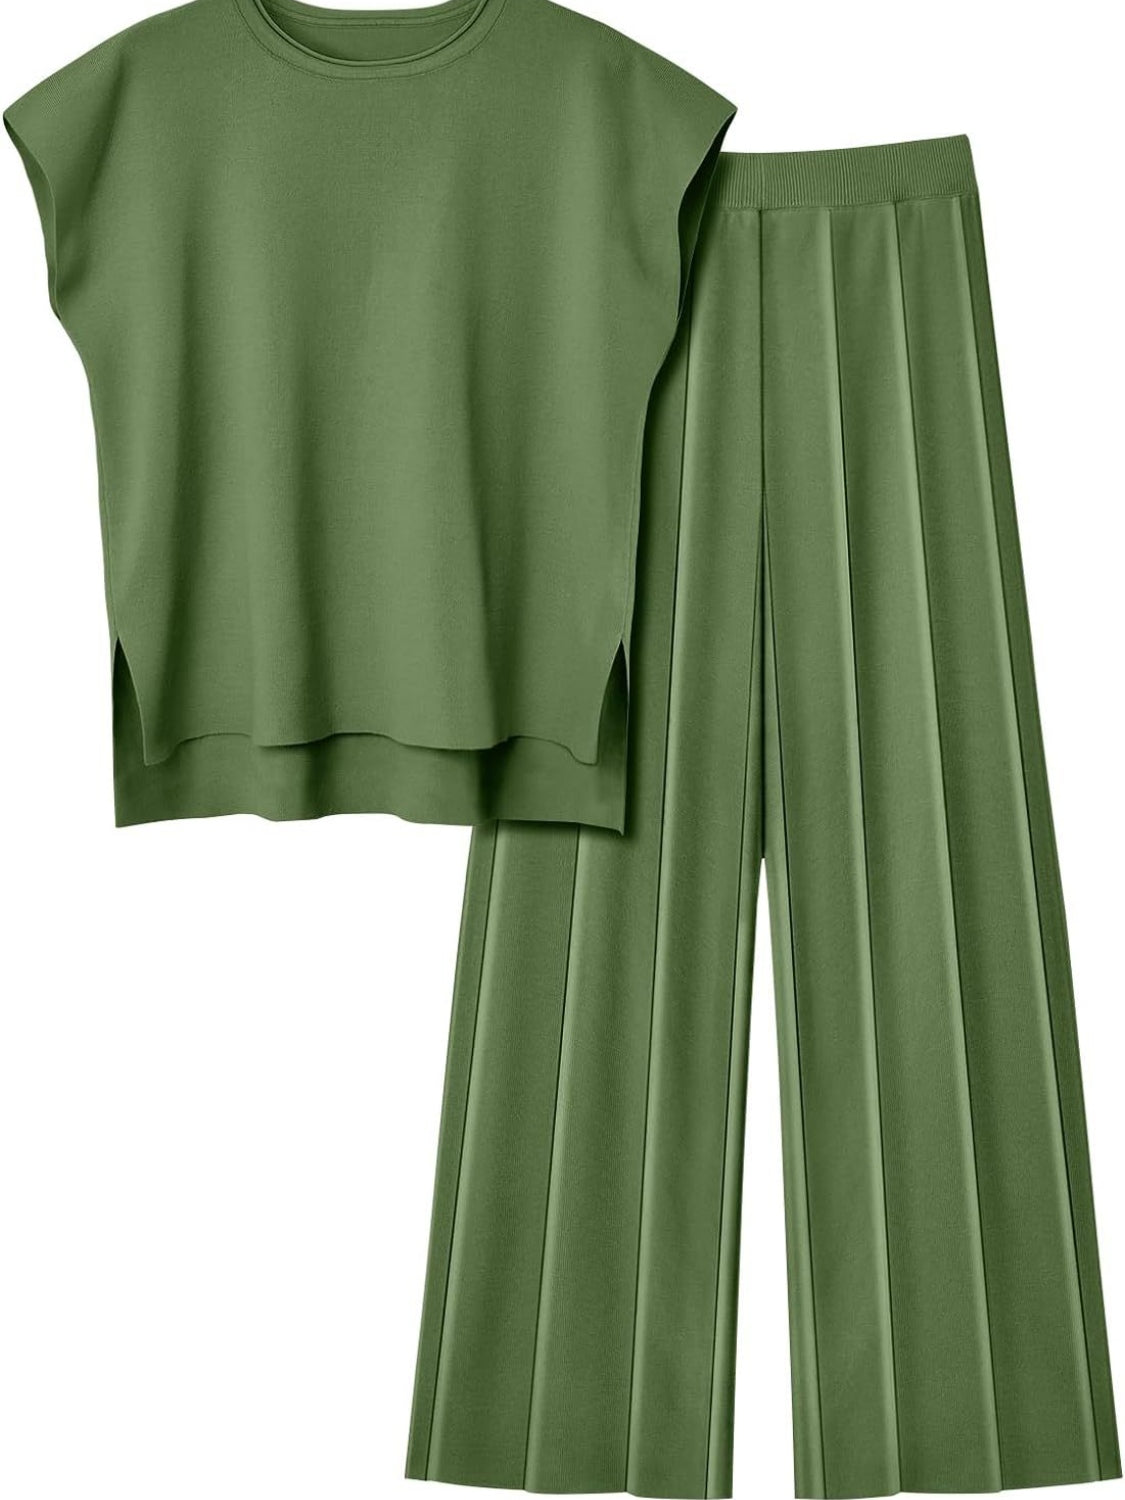 Round Neck Cap Sleeve Top and Pants Knit Set - Fashion BTQ -  - Fashion BTQ